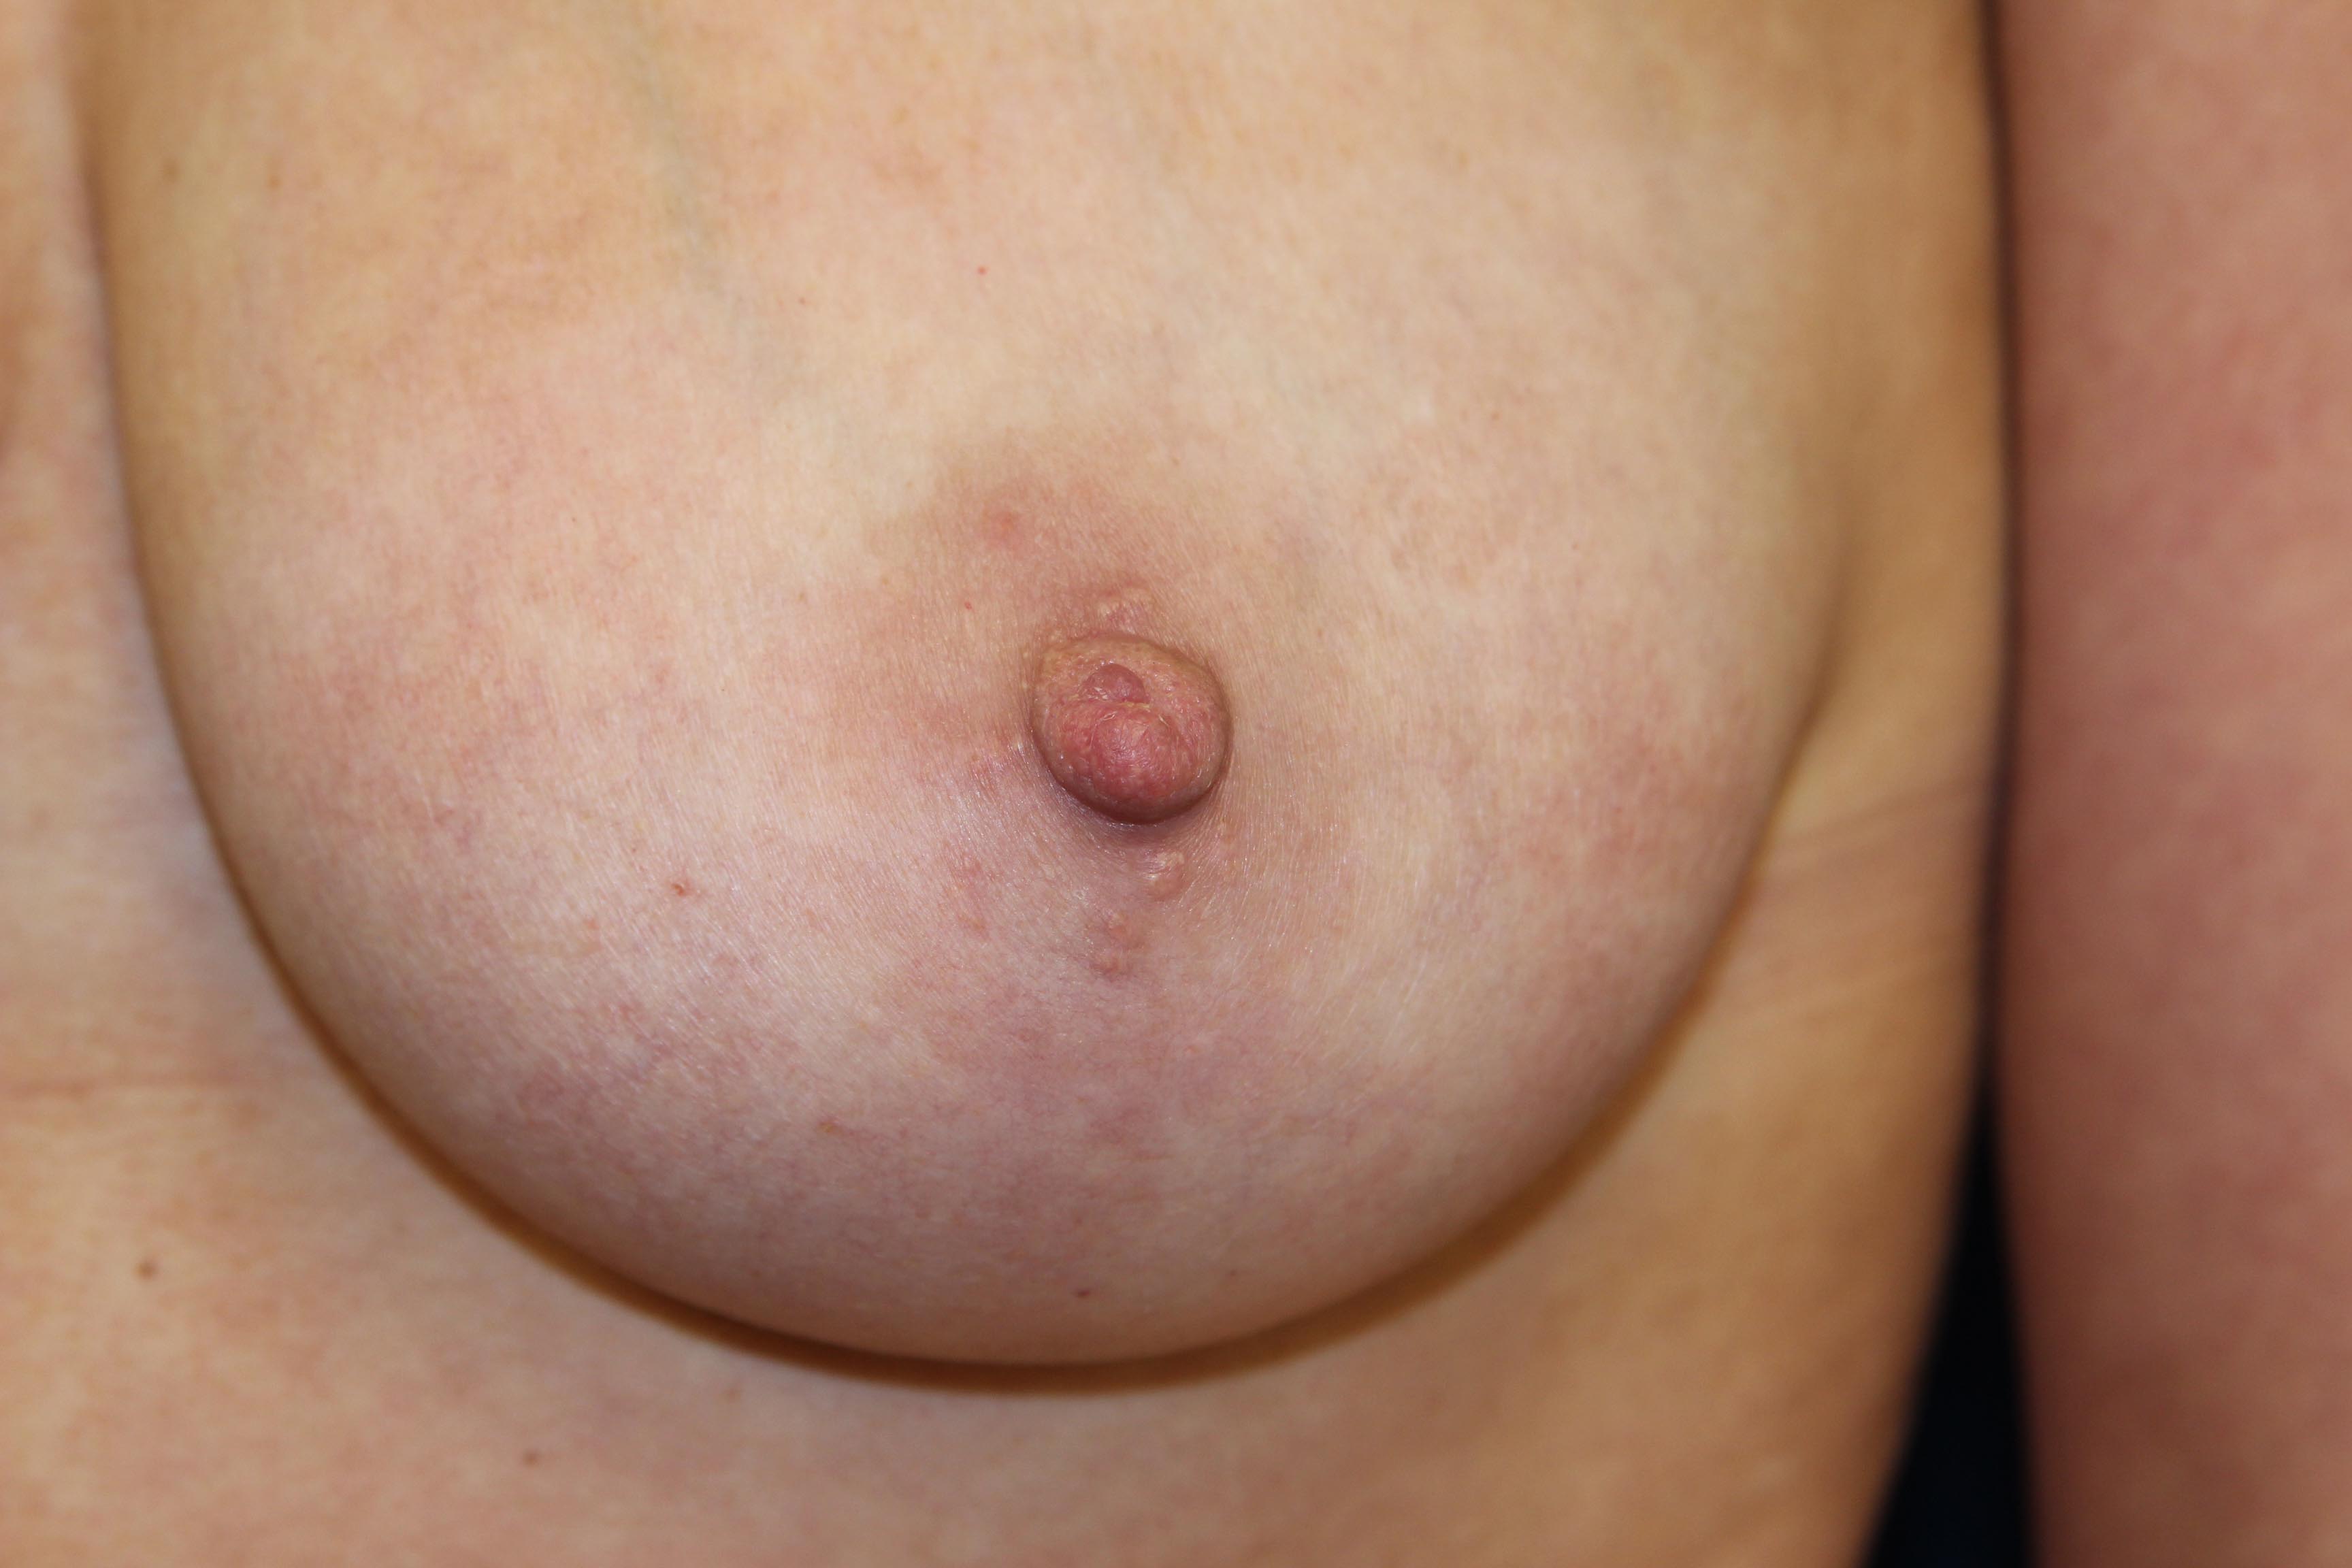 Celeberty nipple